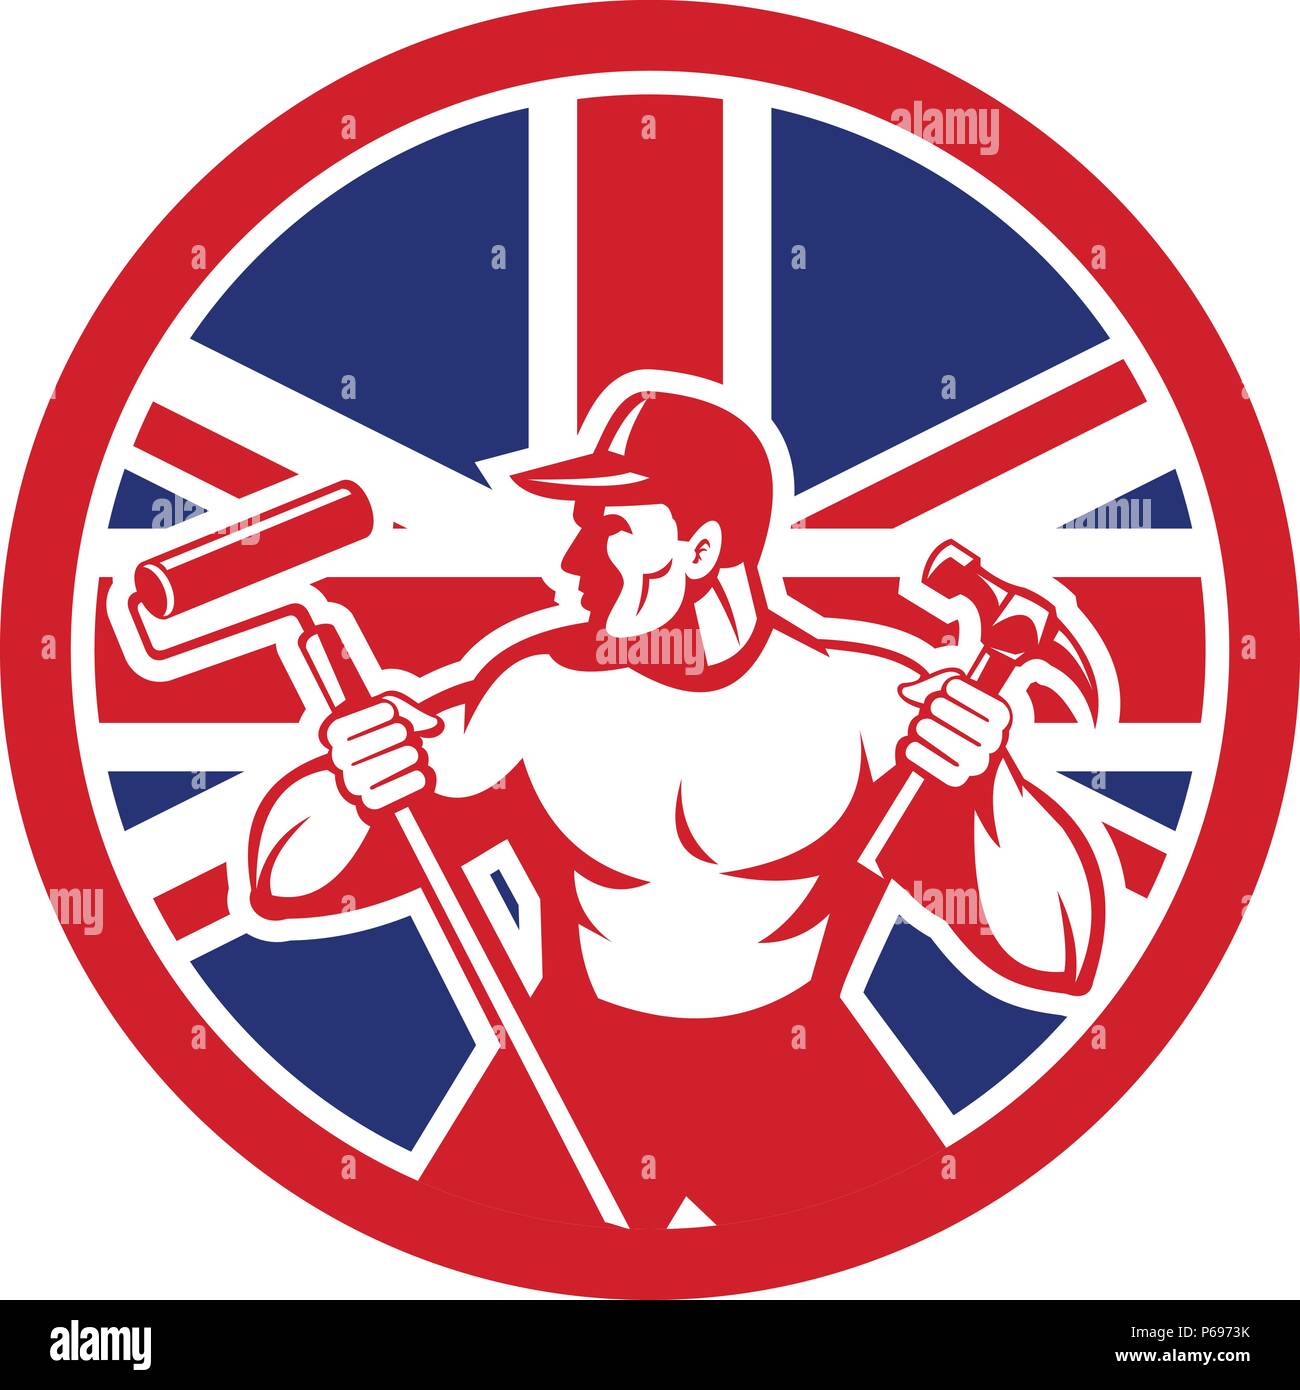 Icon retro style illustration of a British professional handyman or household maintenance guy with United Kingdom UK, Great Britain Union Jack flag se Stock Vector